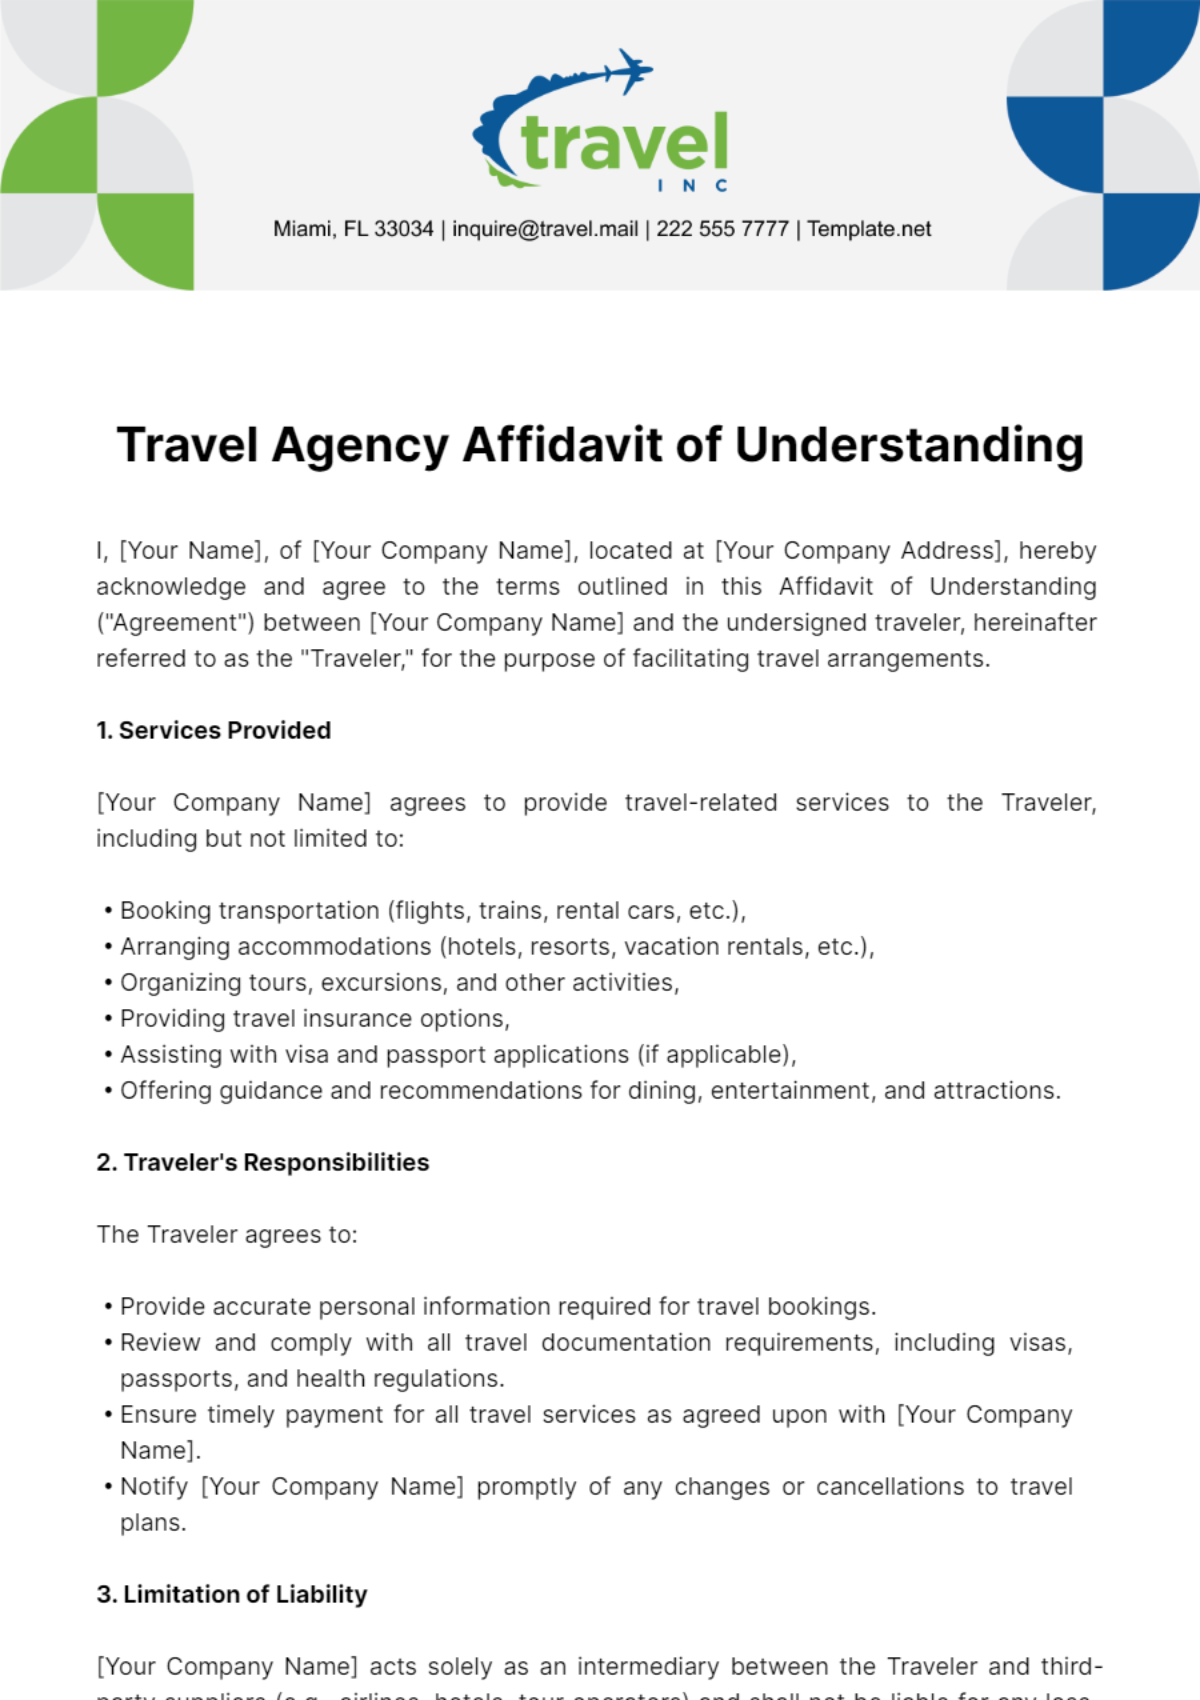 Free Travel Agency Affidavit of Understanding Template